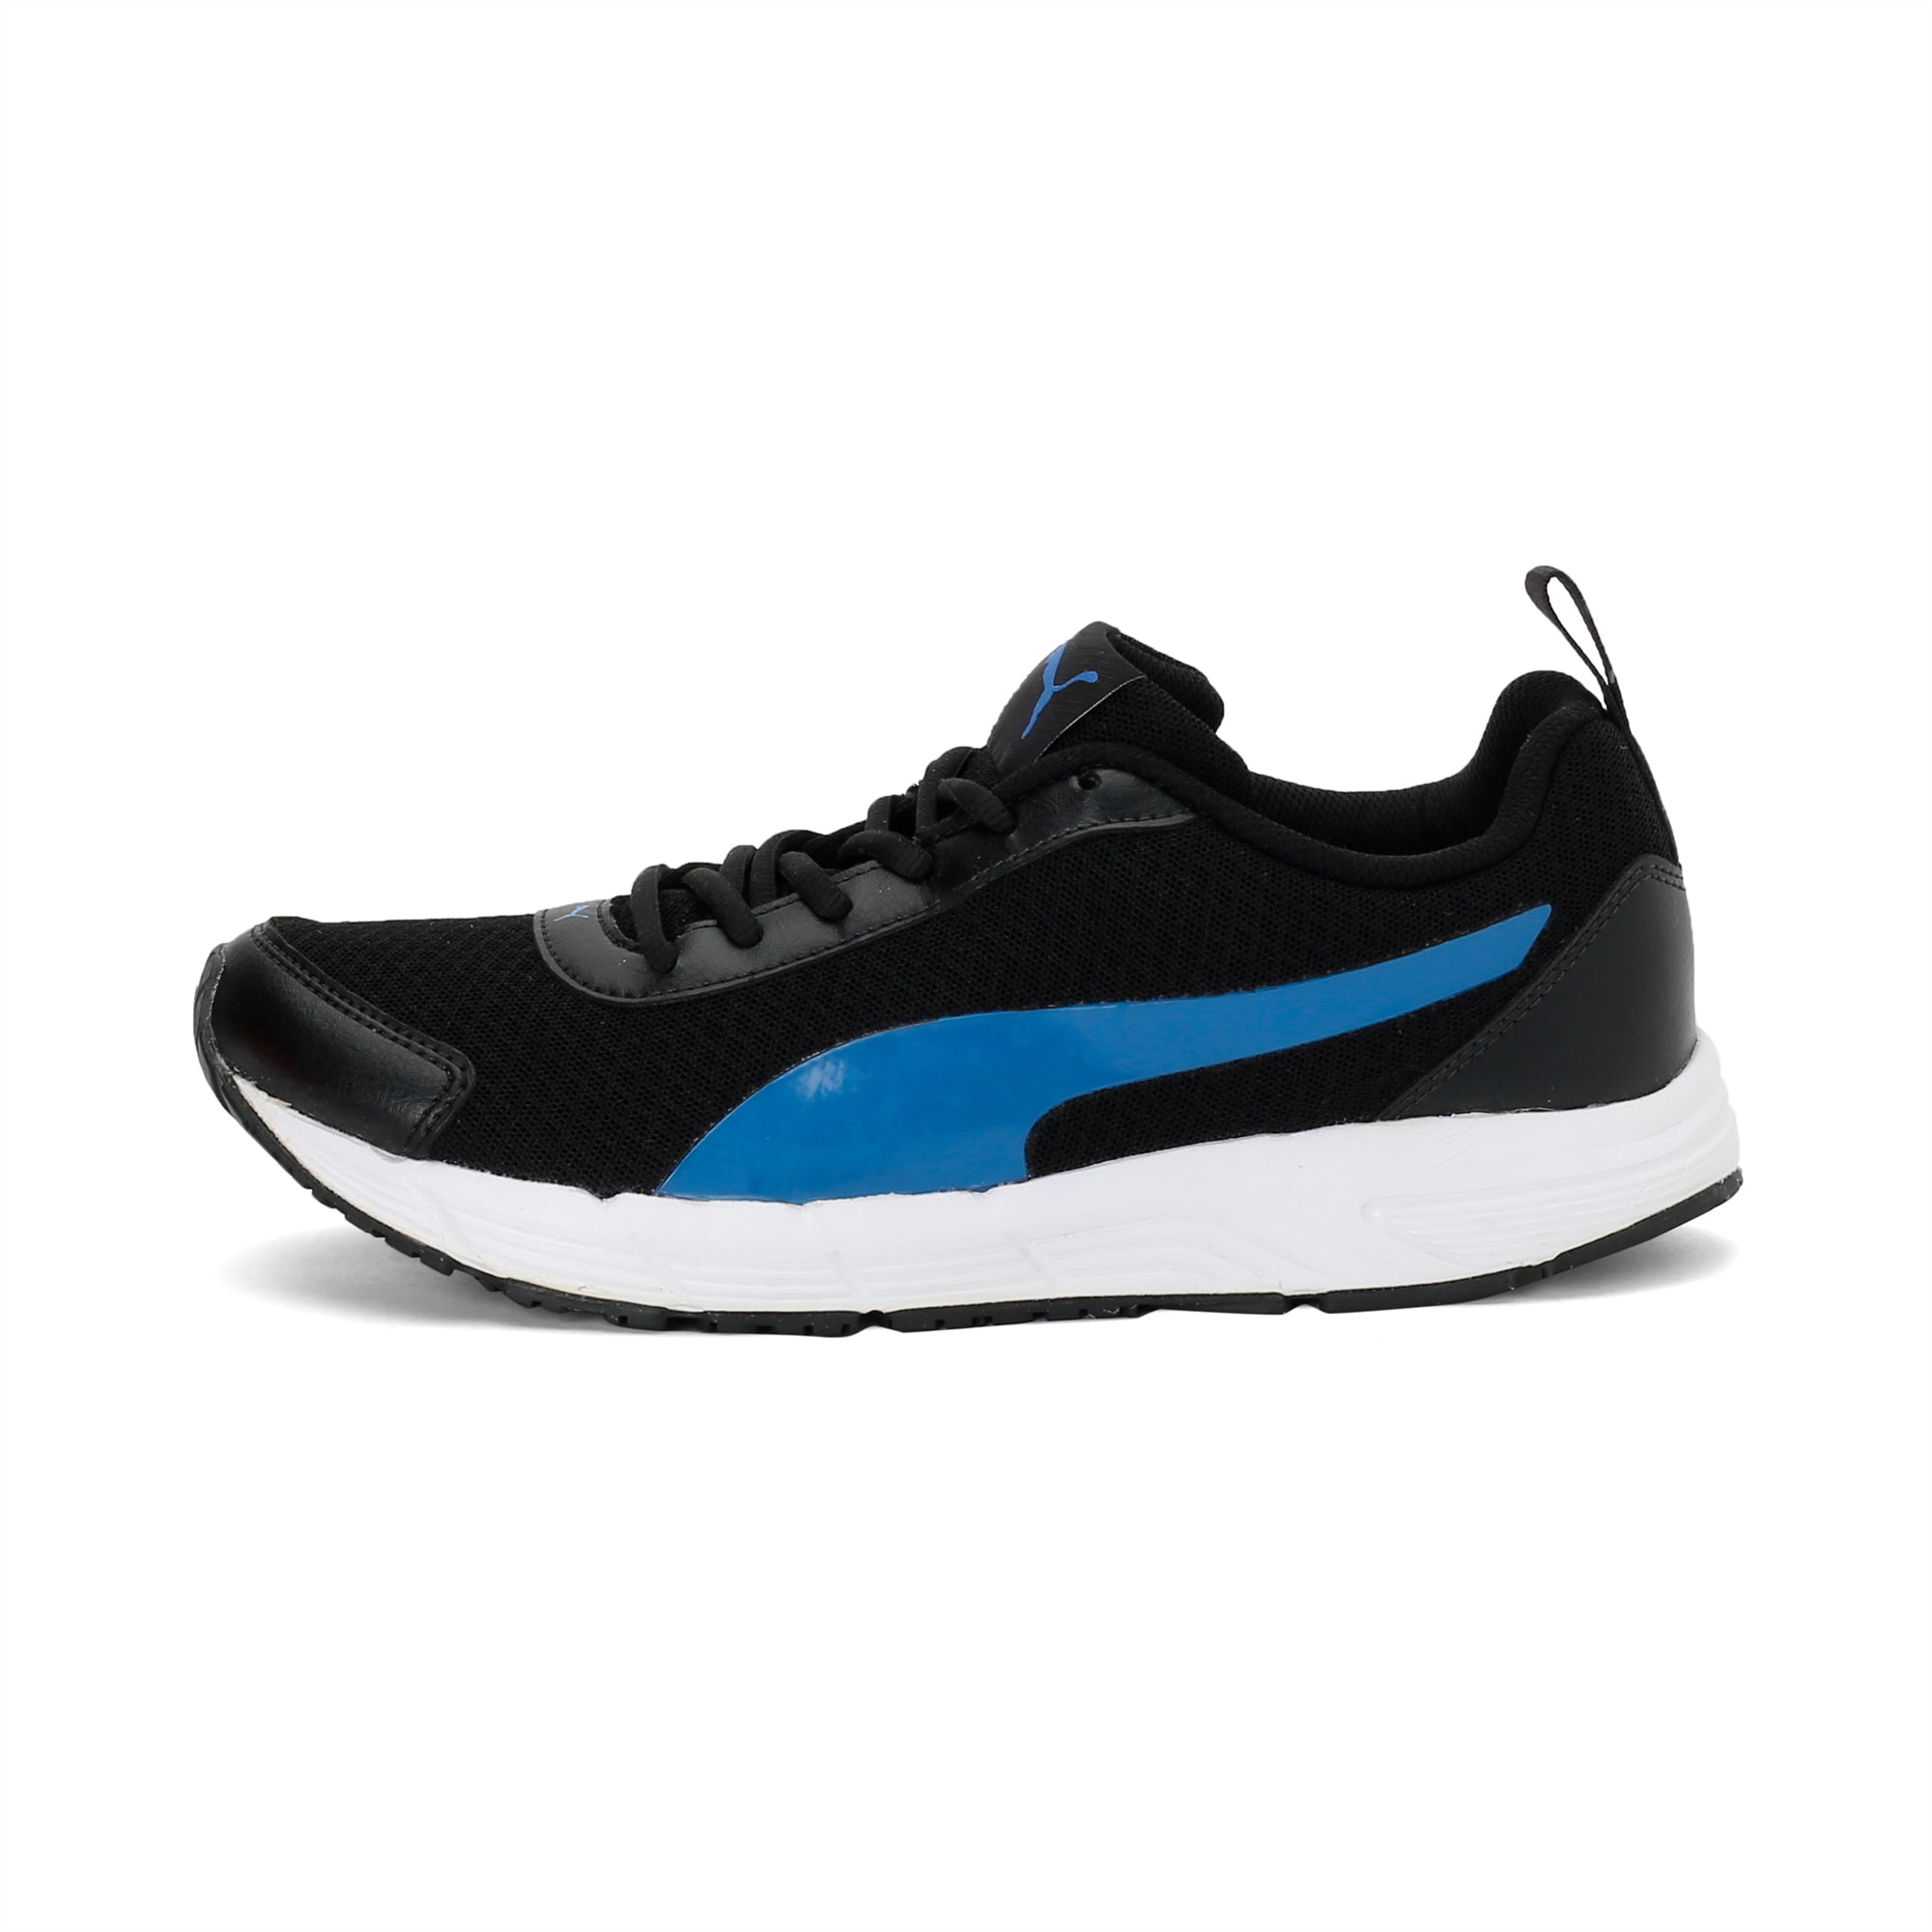 puma blue and black shoes